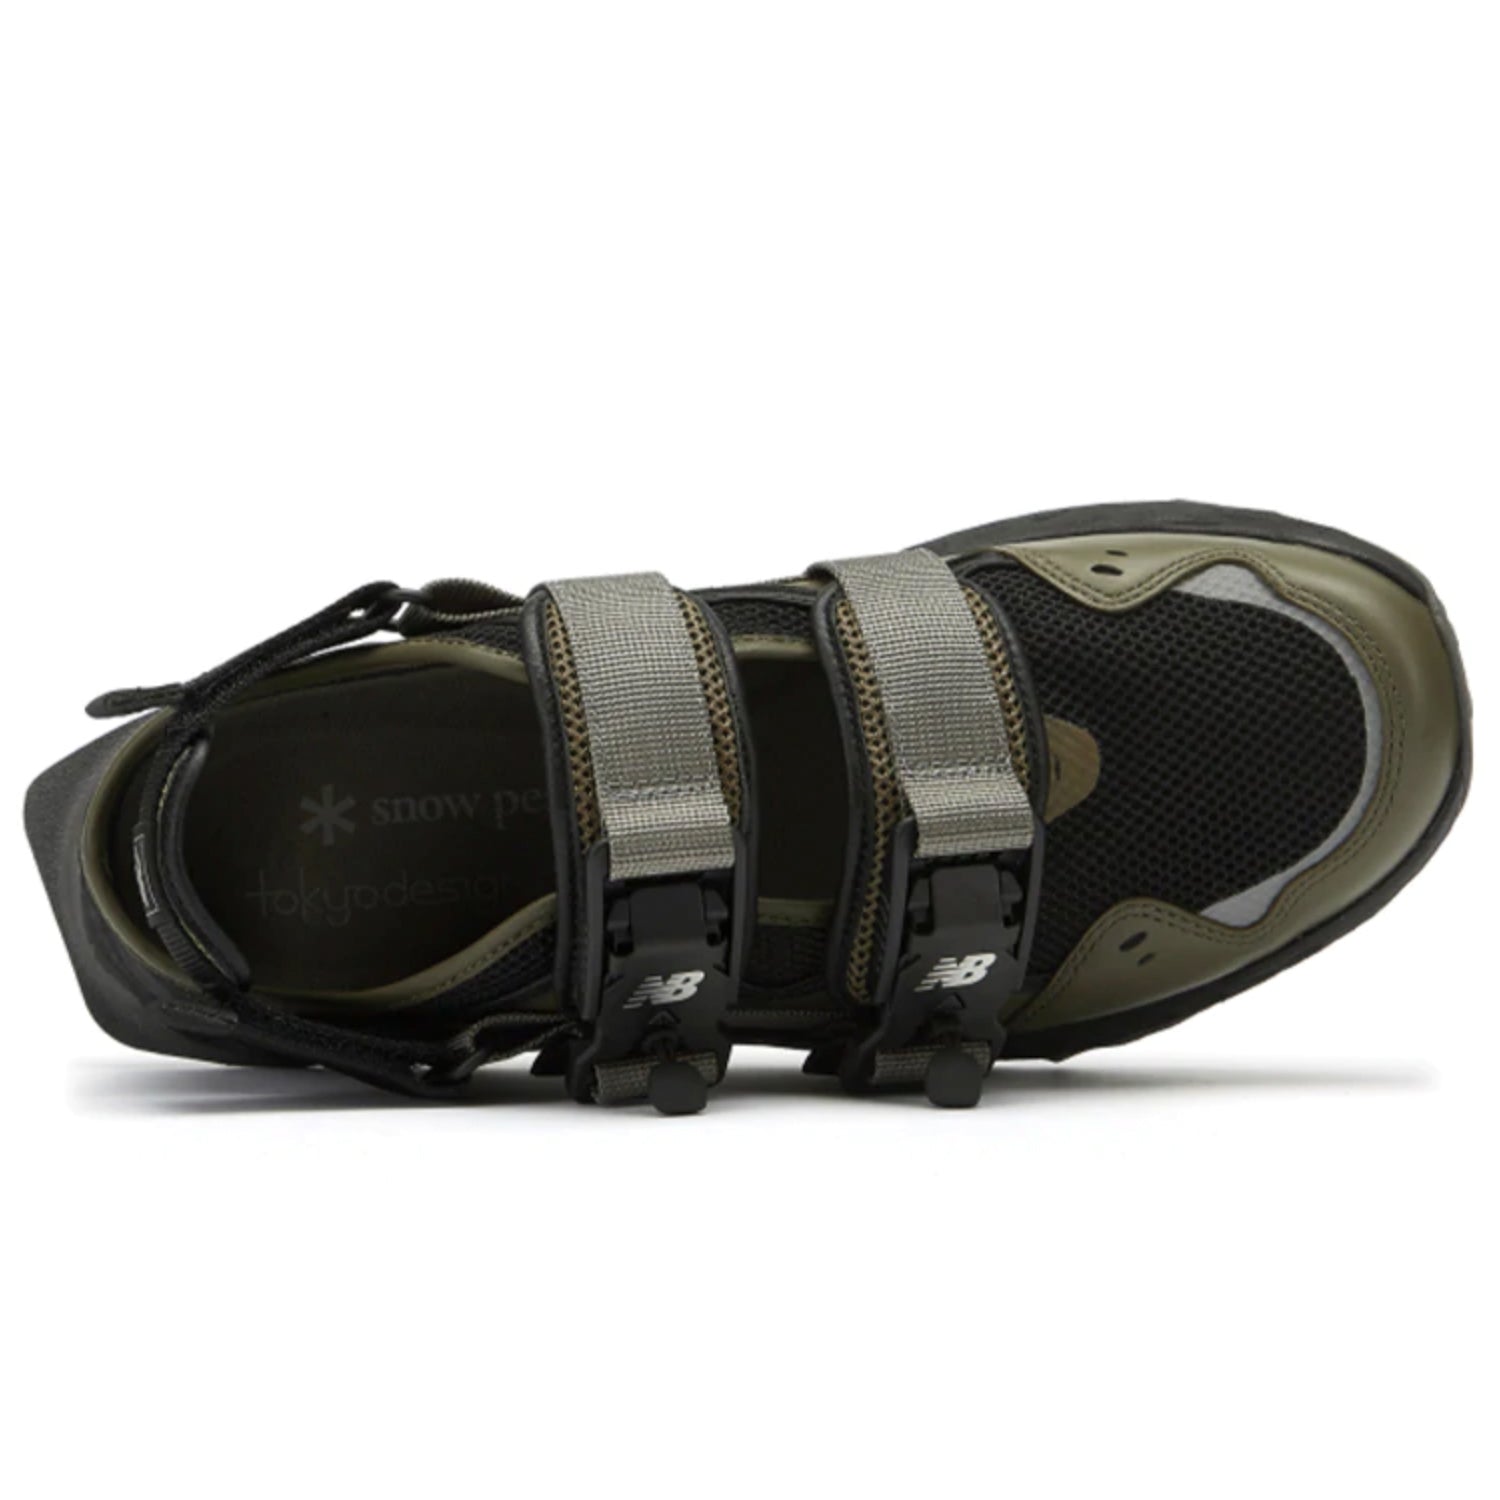 Snow Peak x Tokyo Design Studio x New Balance Niobium Concept 2 Sandals | RADPRESENT Men 42 / Olive Green/ Black / Leather/ Mesh Upper